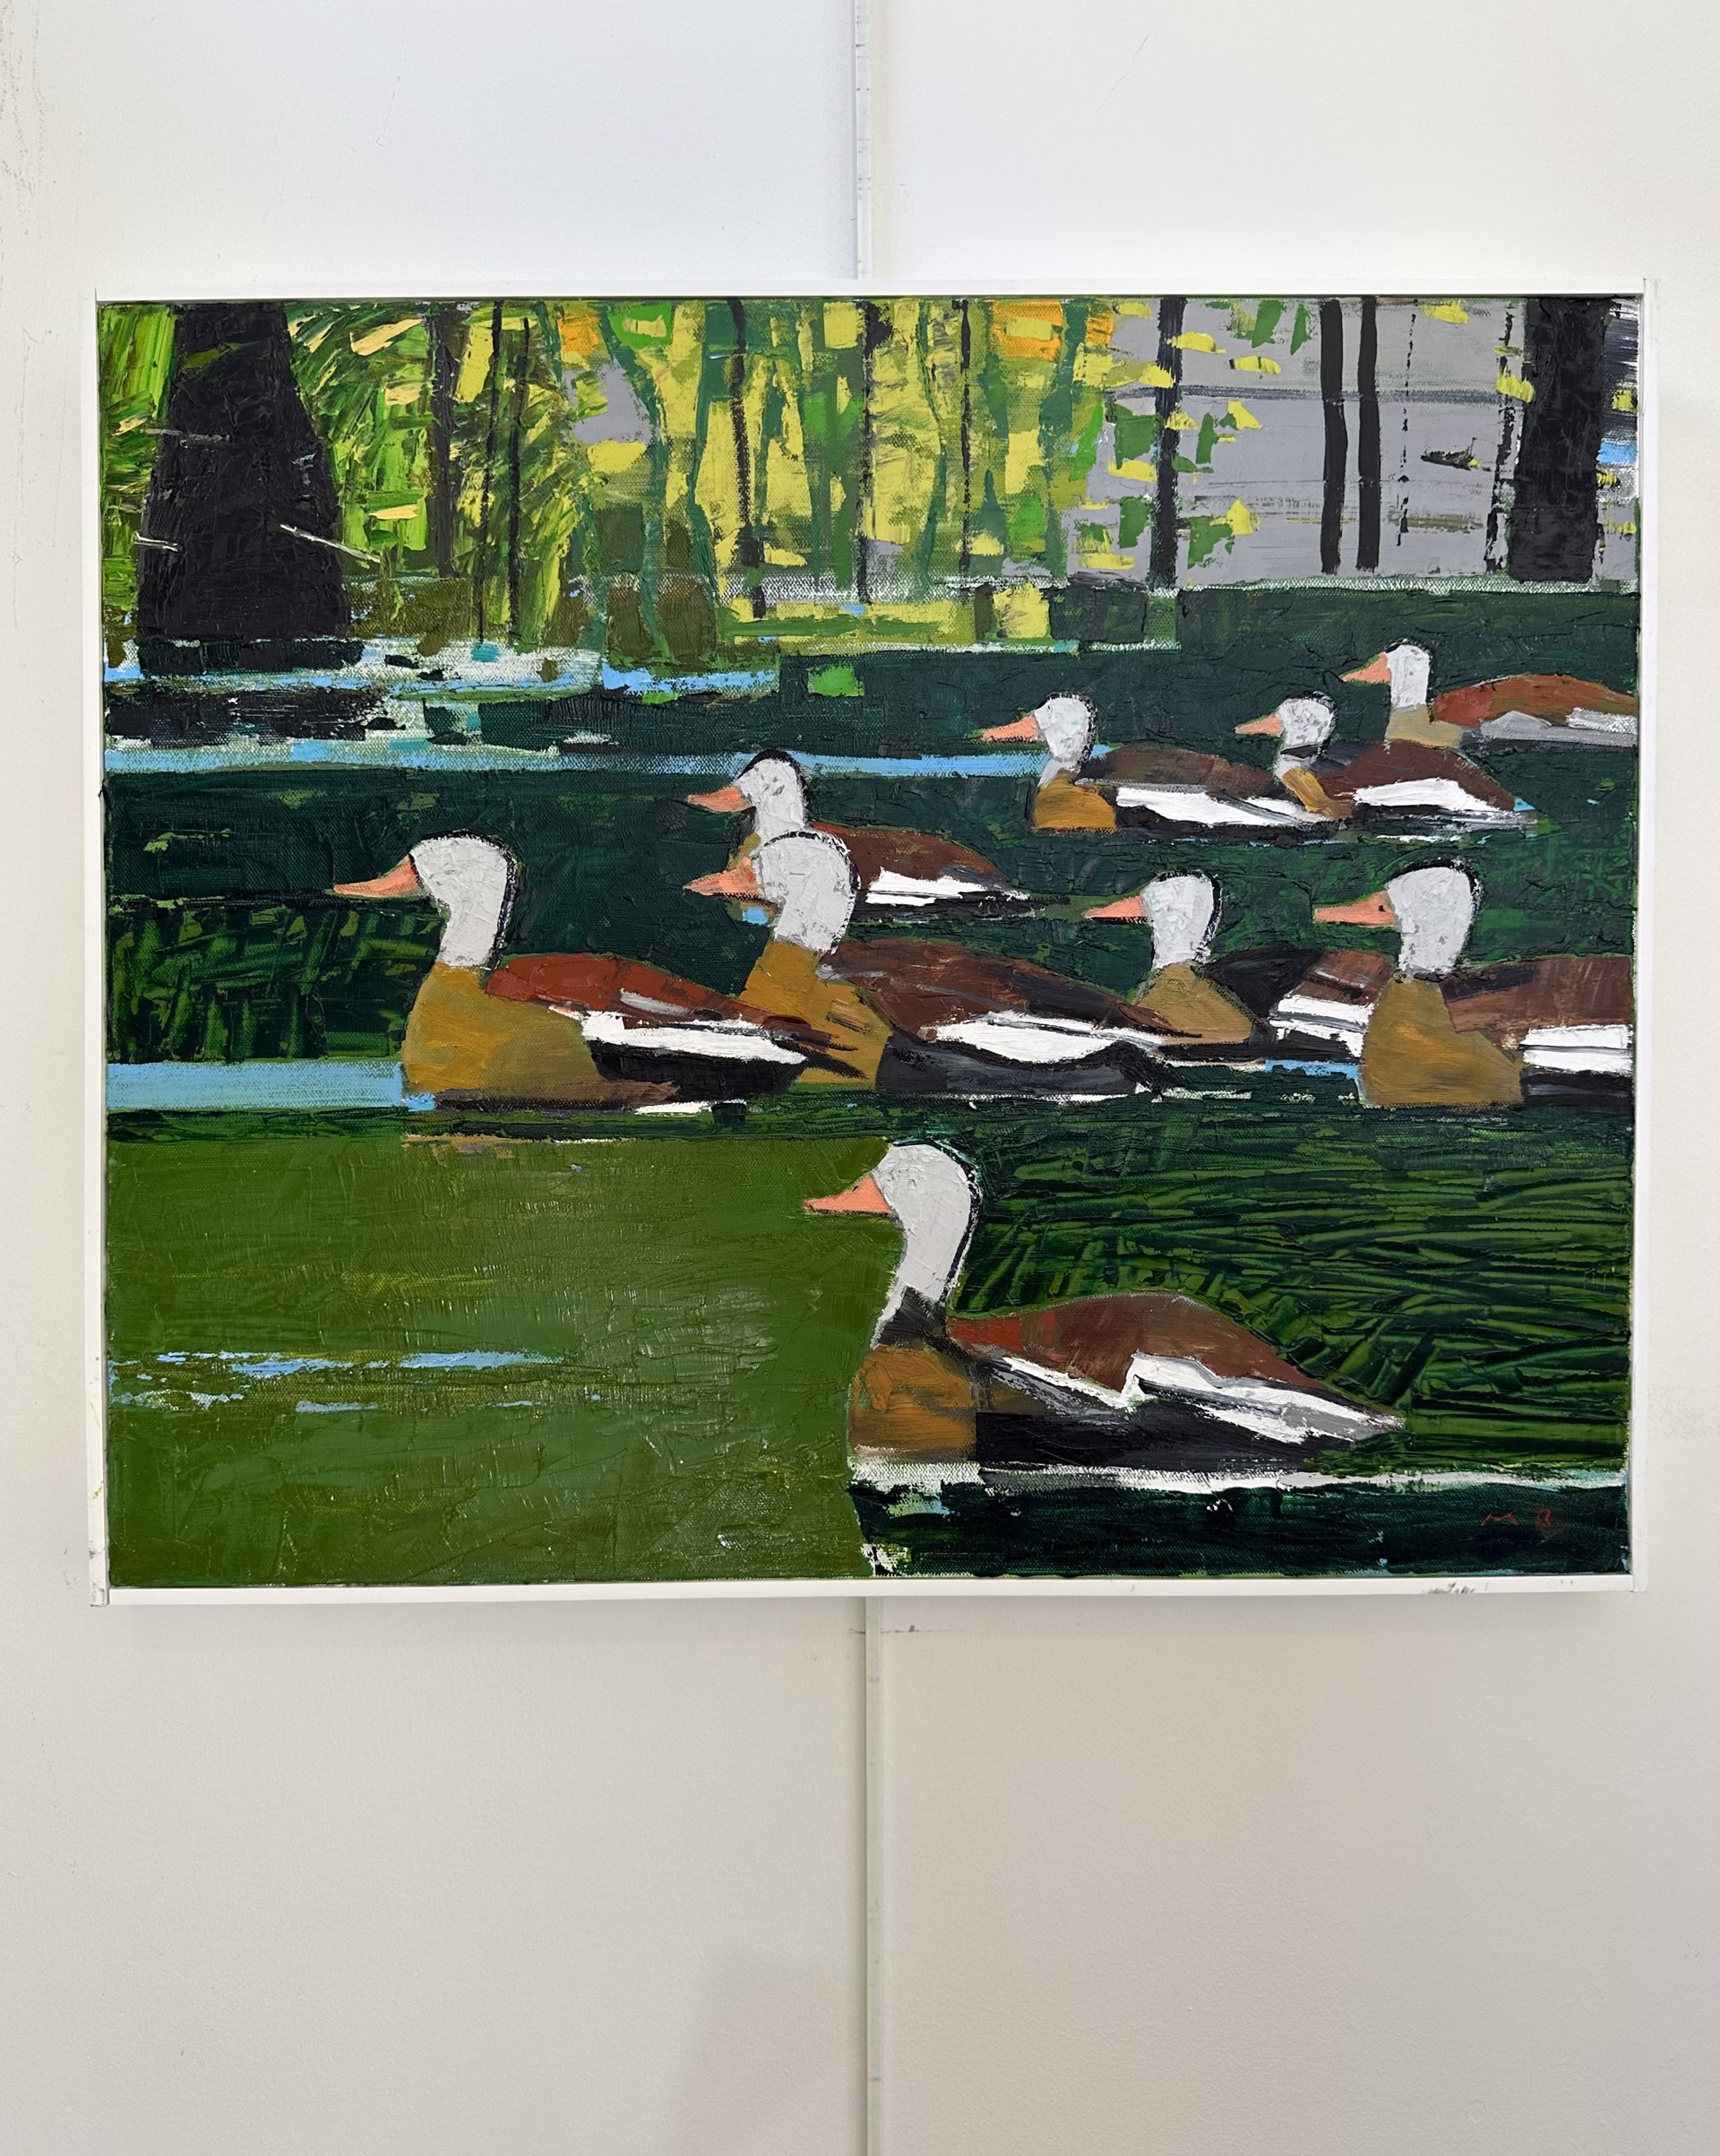 Nine Blind Ducks by Mac Ball